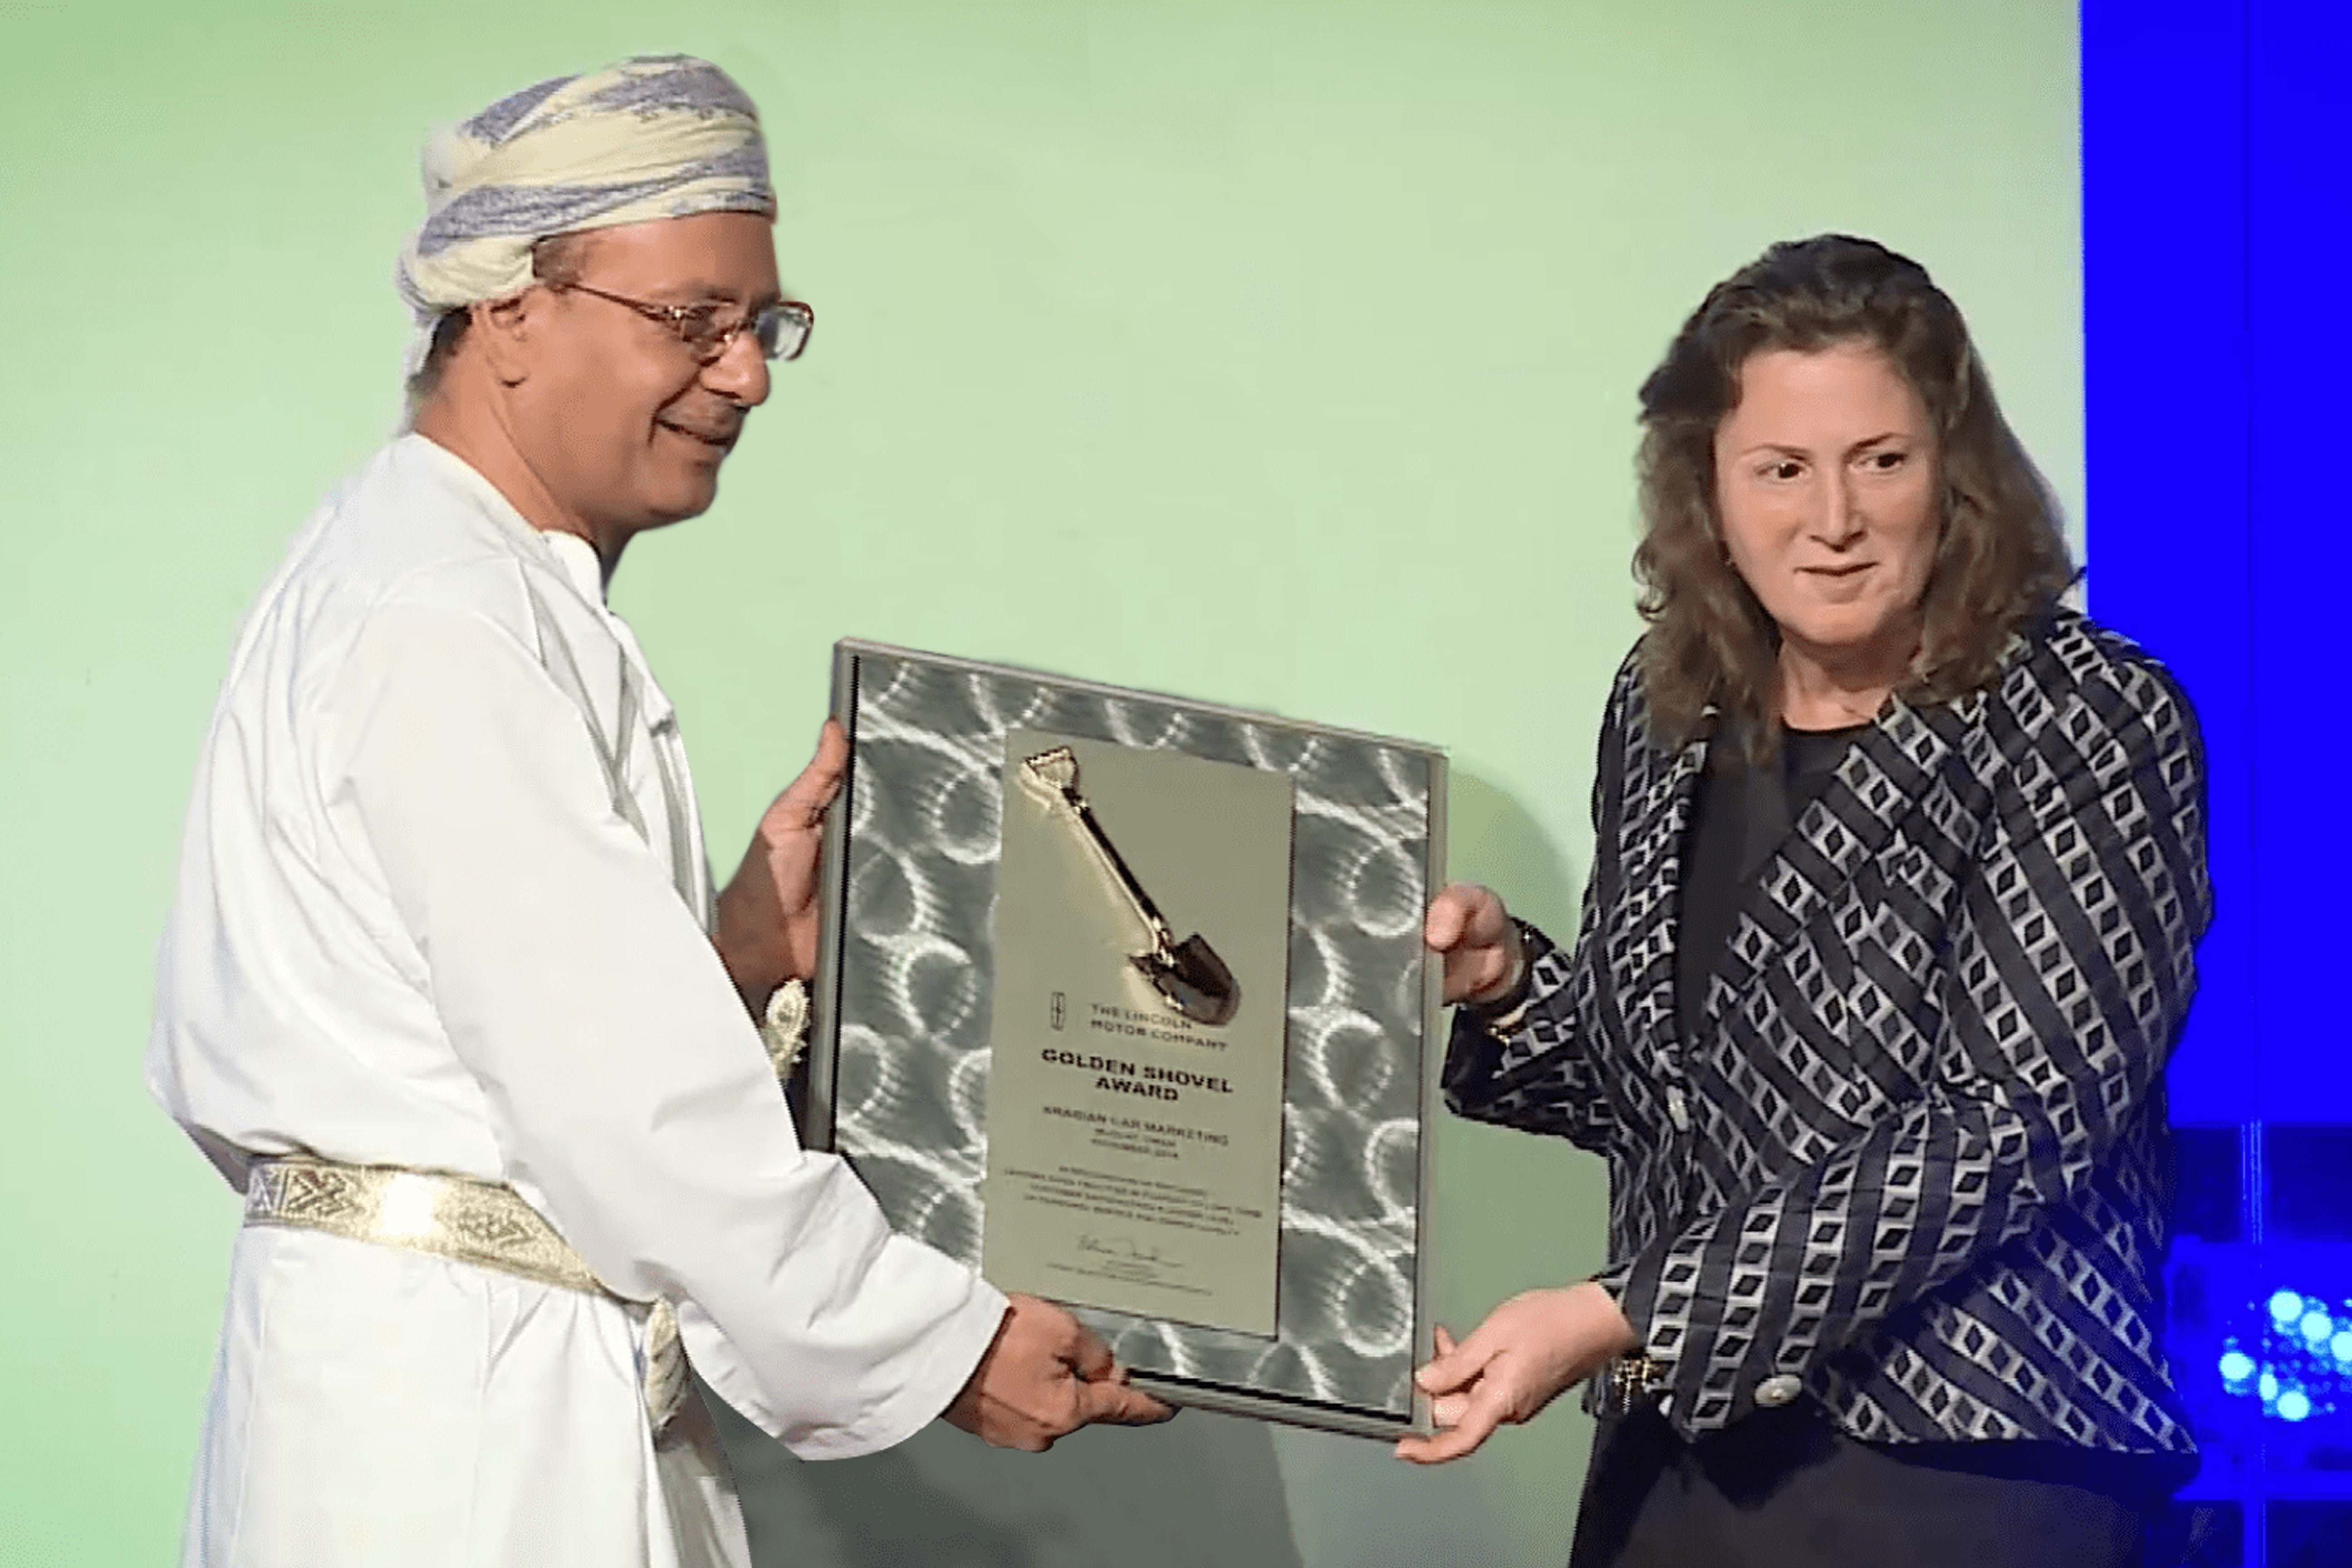 Golden Shovel award being presented to Mohammed Saud Bahwan